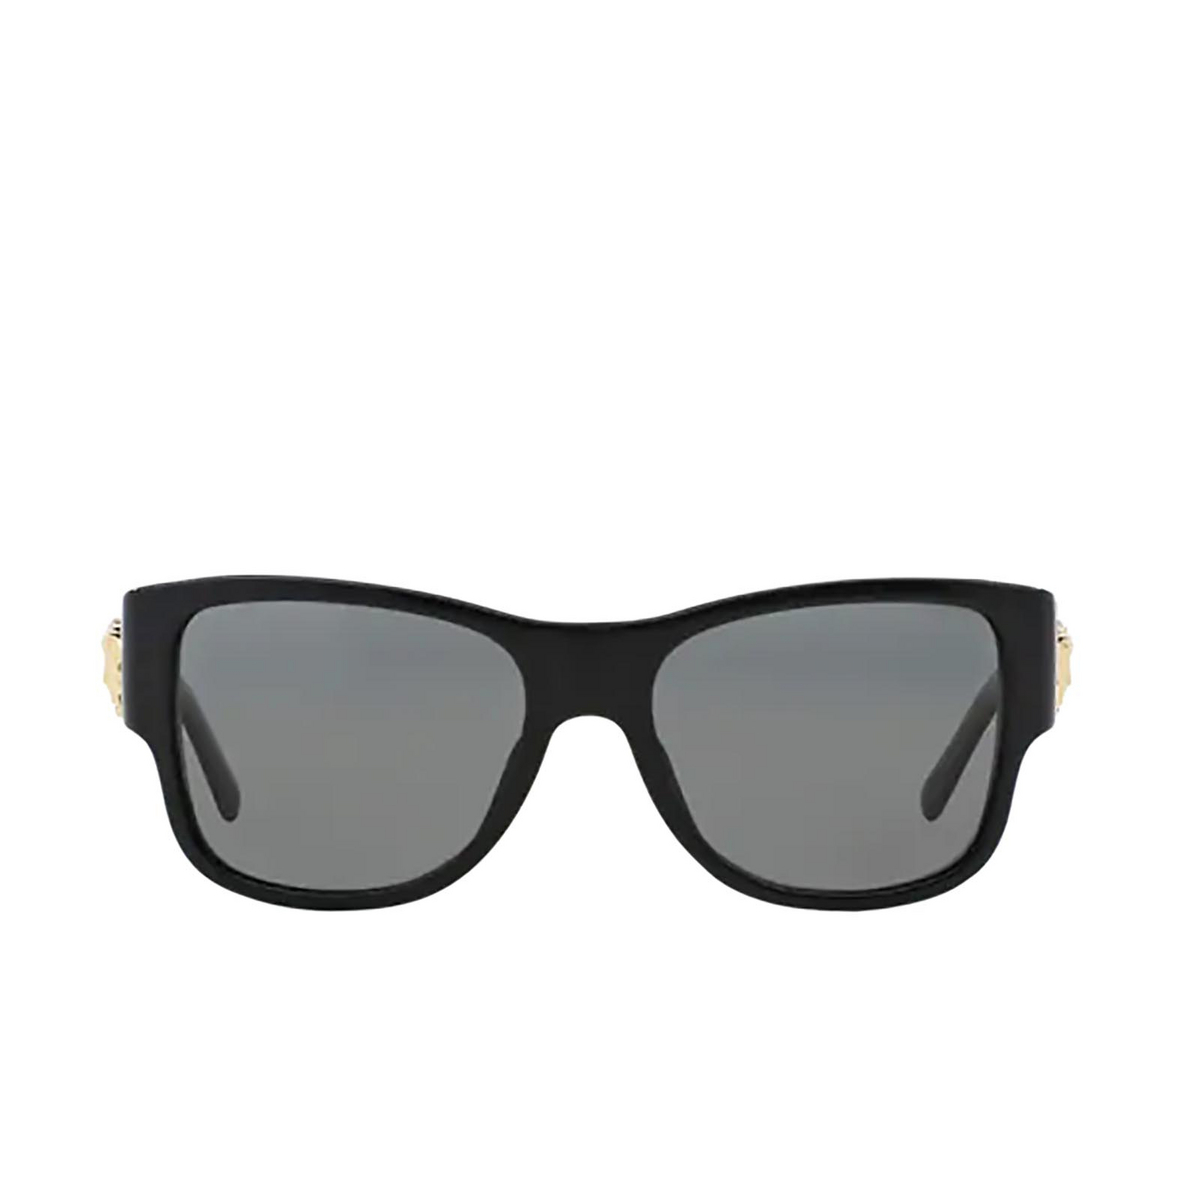 Versace VE4275 Sunglasses GB1/81 Black - front view